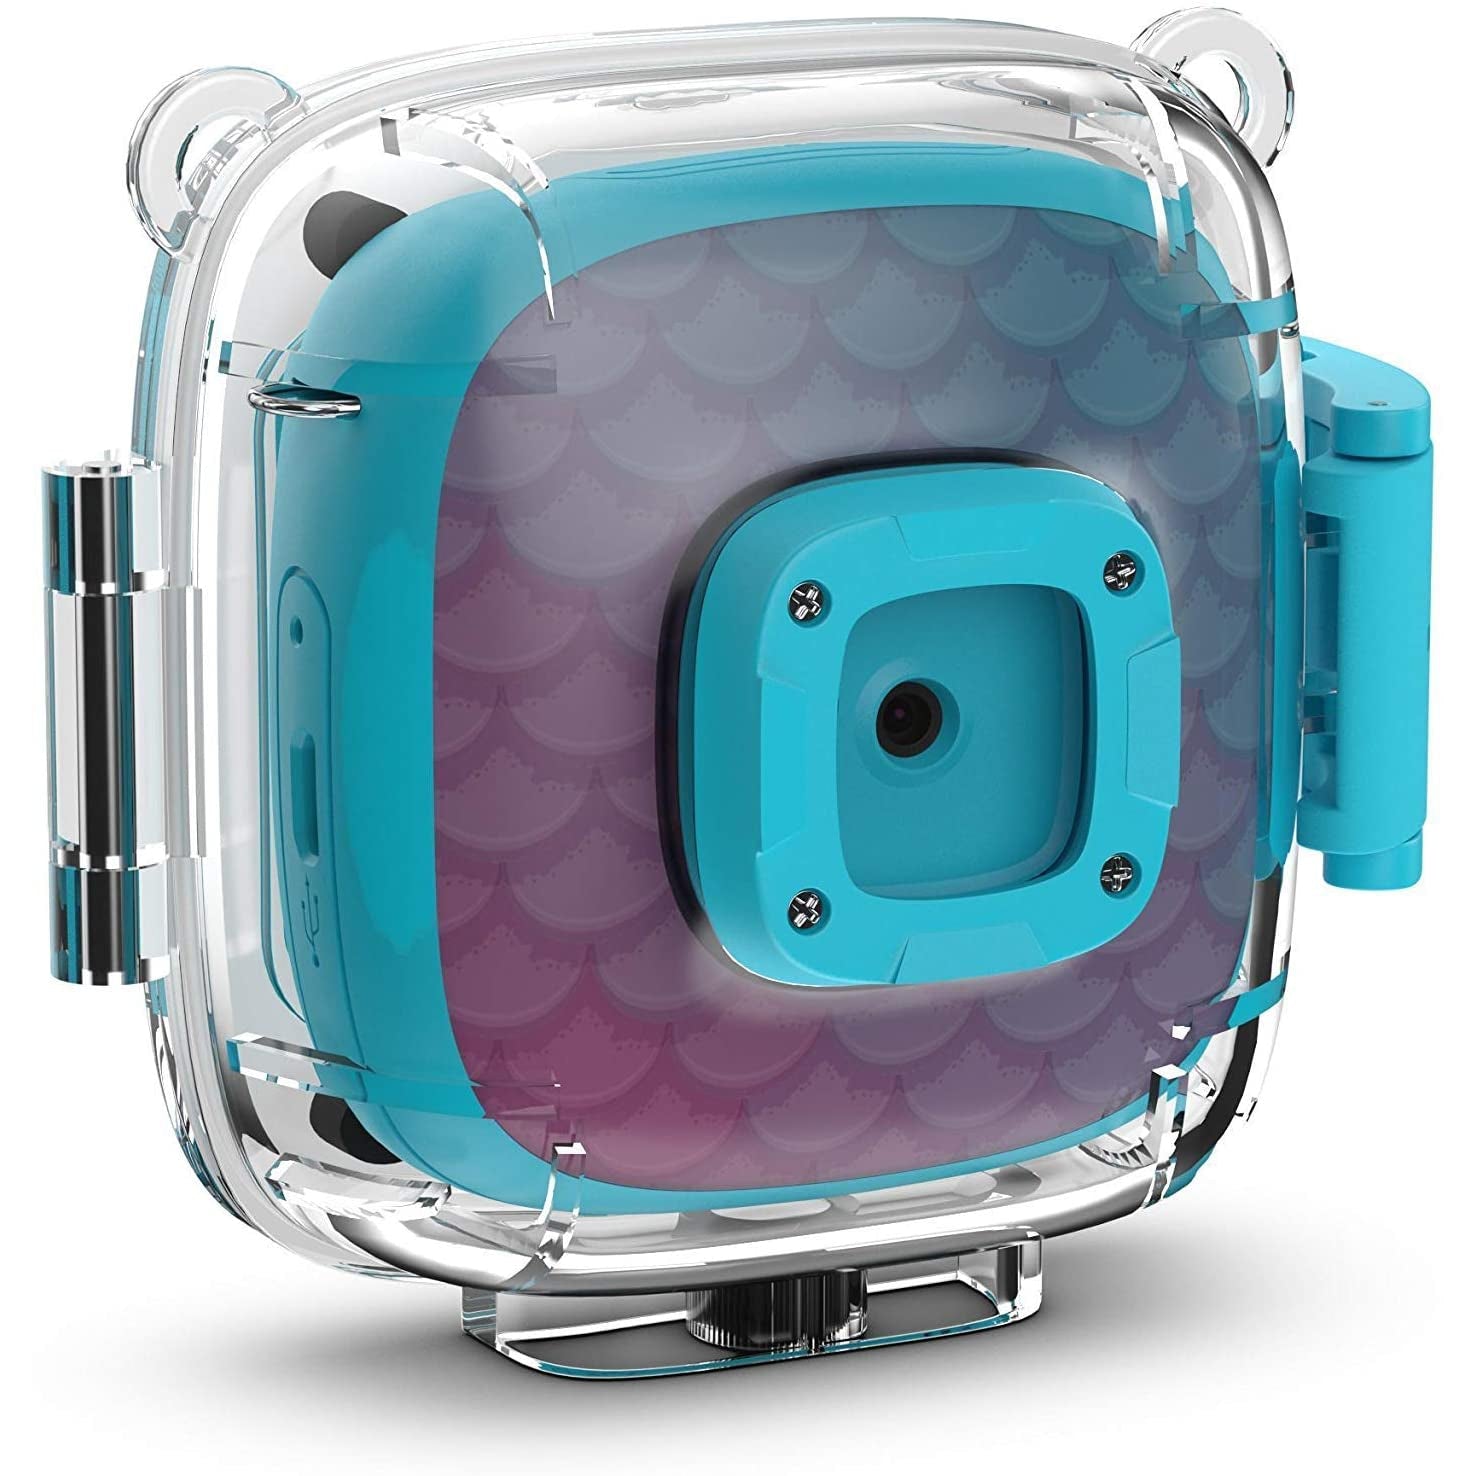 Kitvision Kids Waterproof Digital Action Camera for Children - Blue